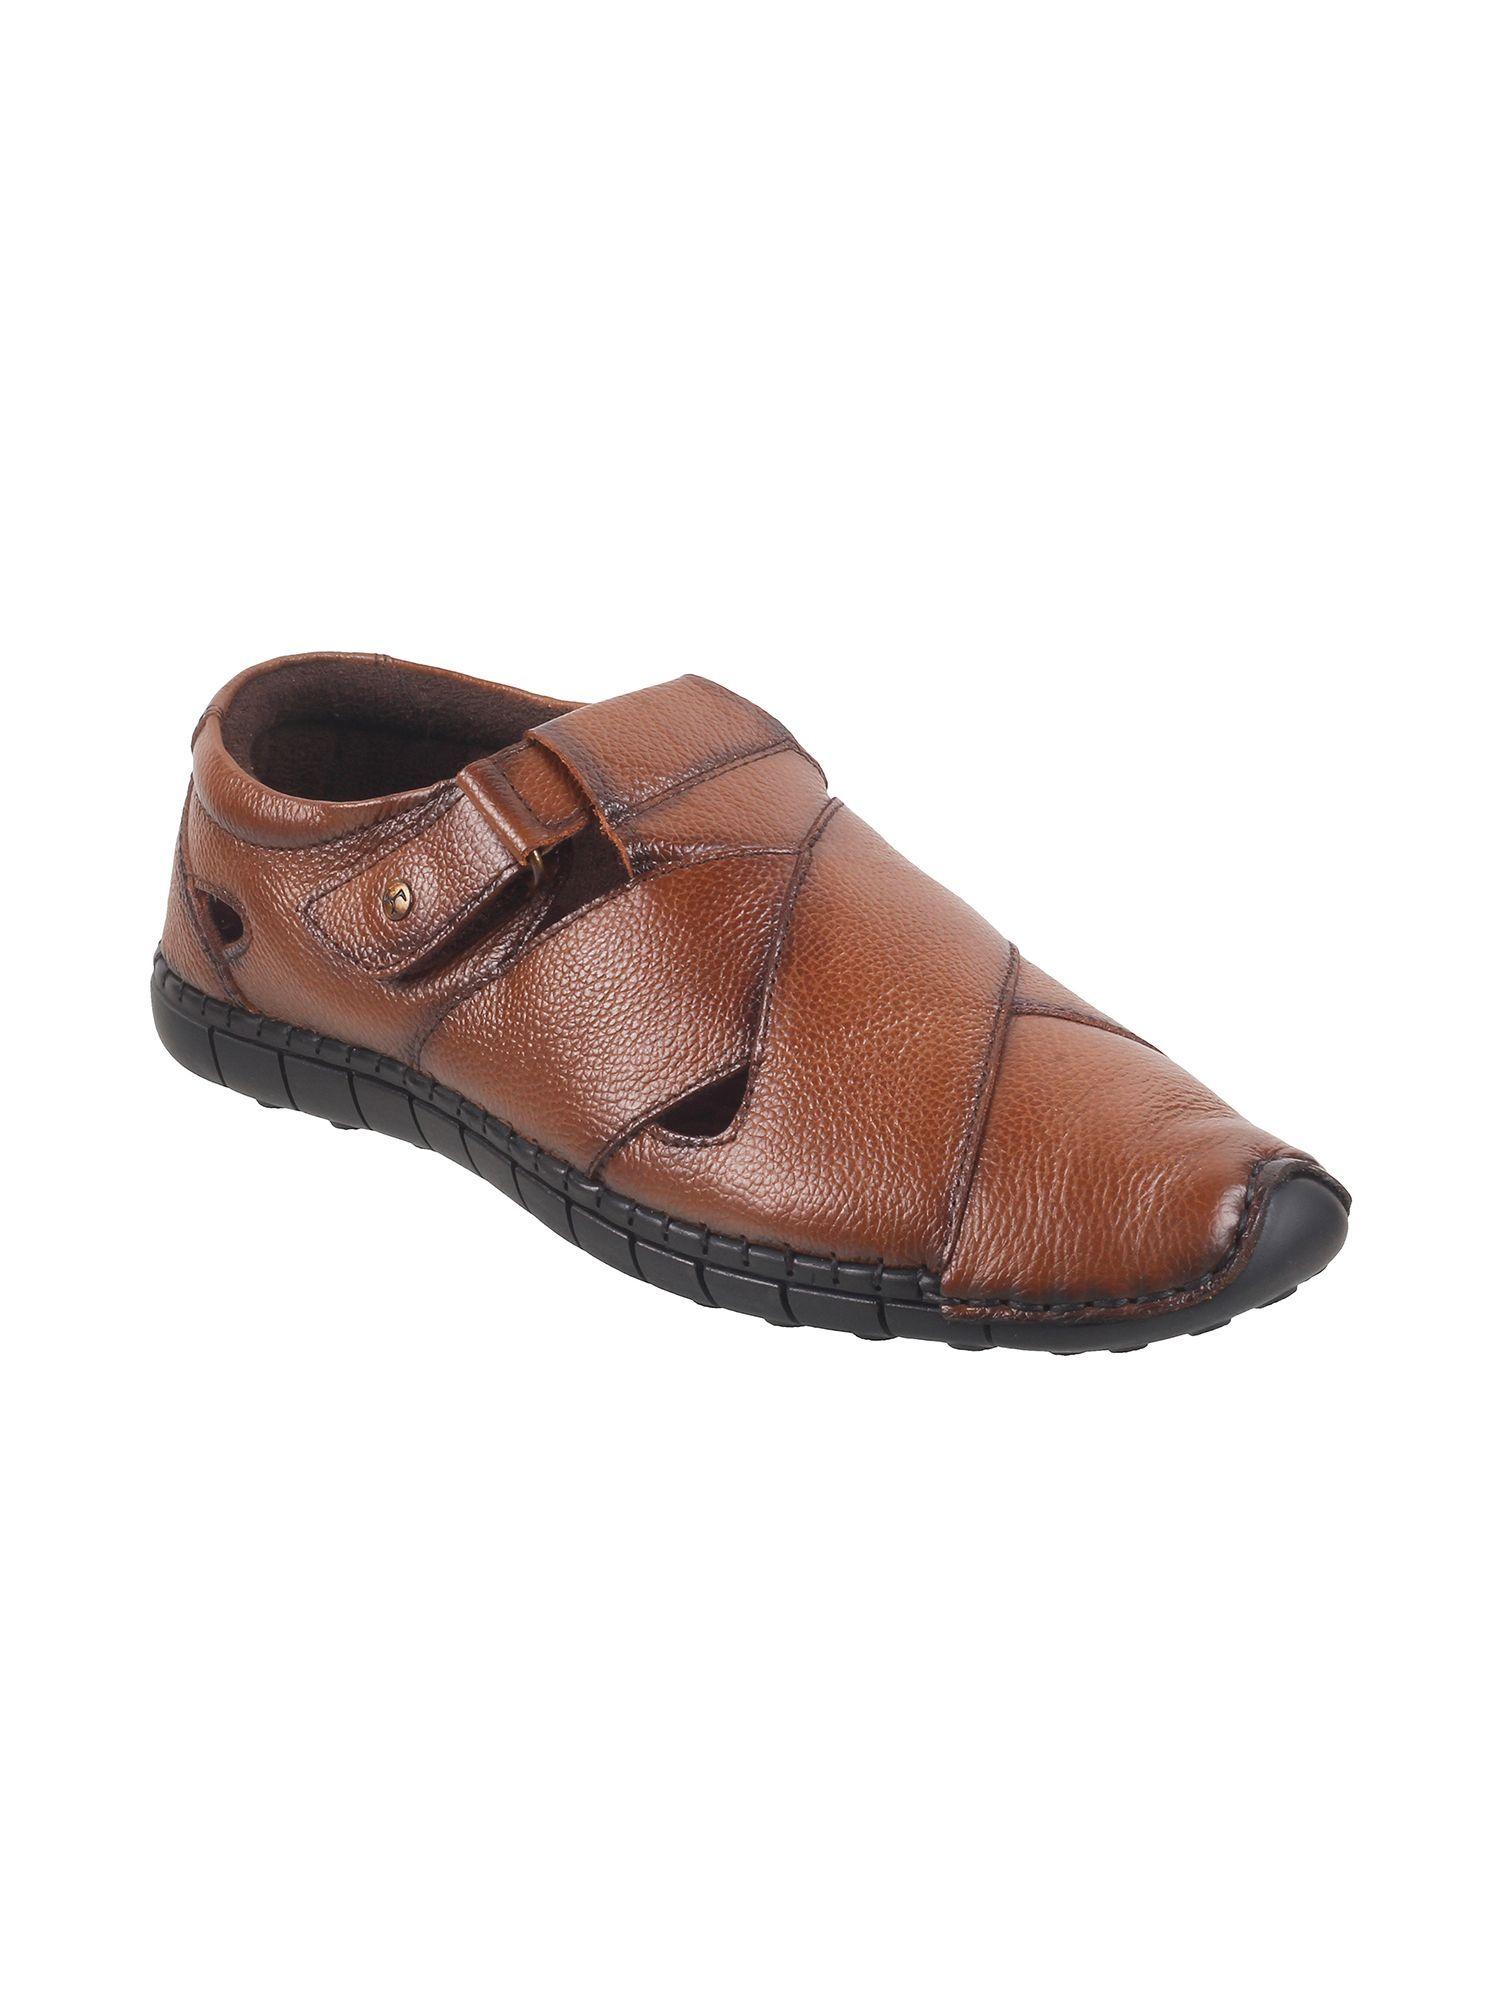 Men Casual Leather Tan Sandals